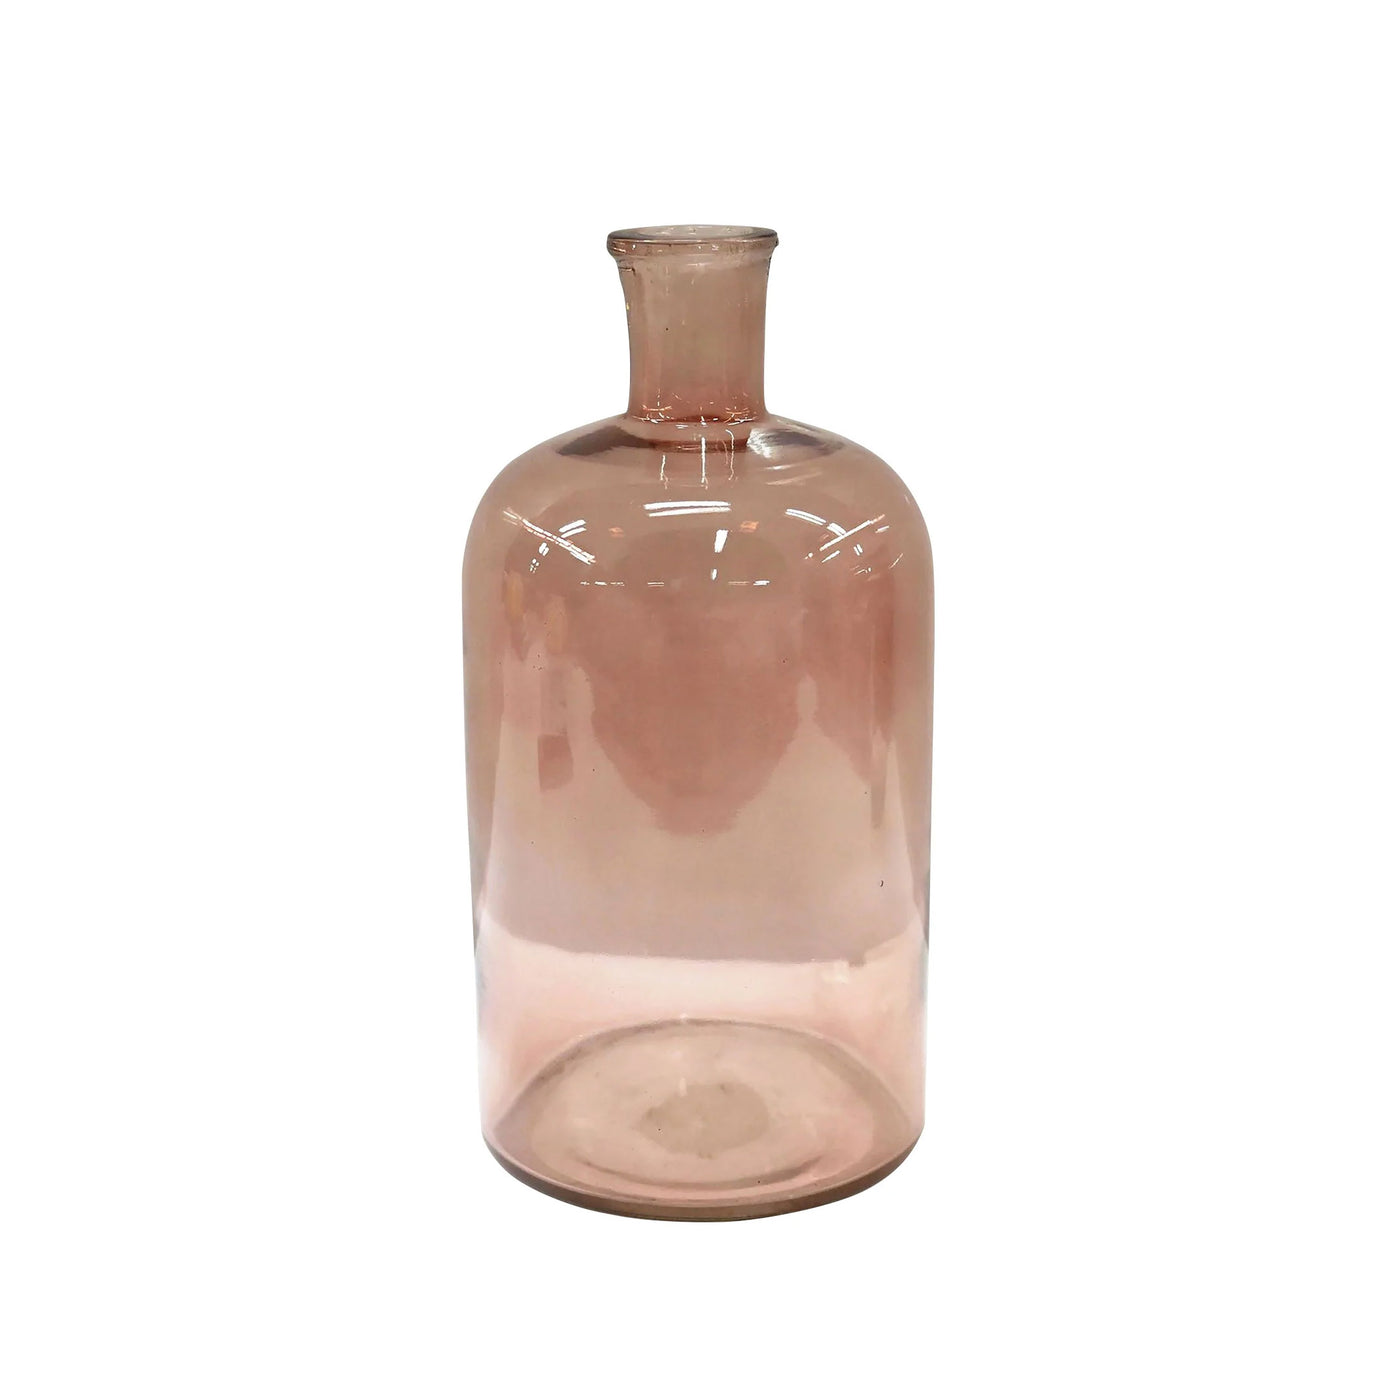 The Rose Tonic Bottle Vase